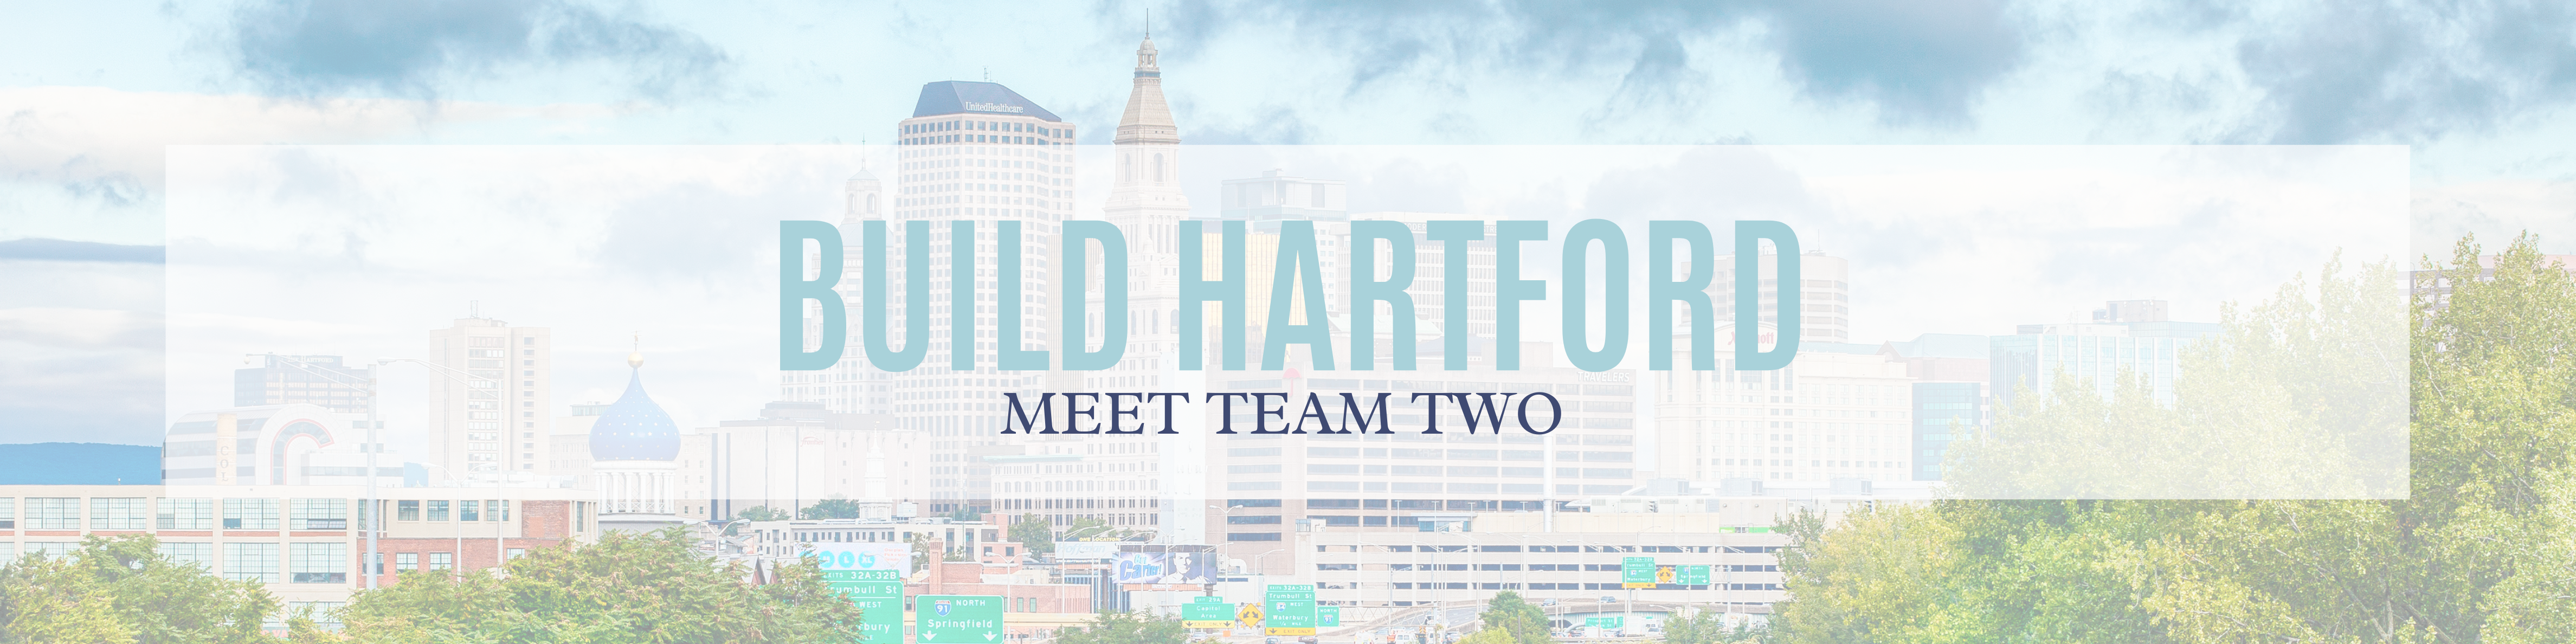 build hartford team two